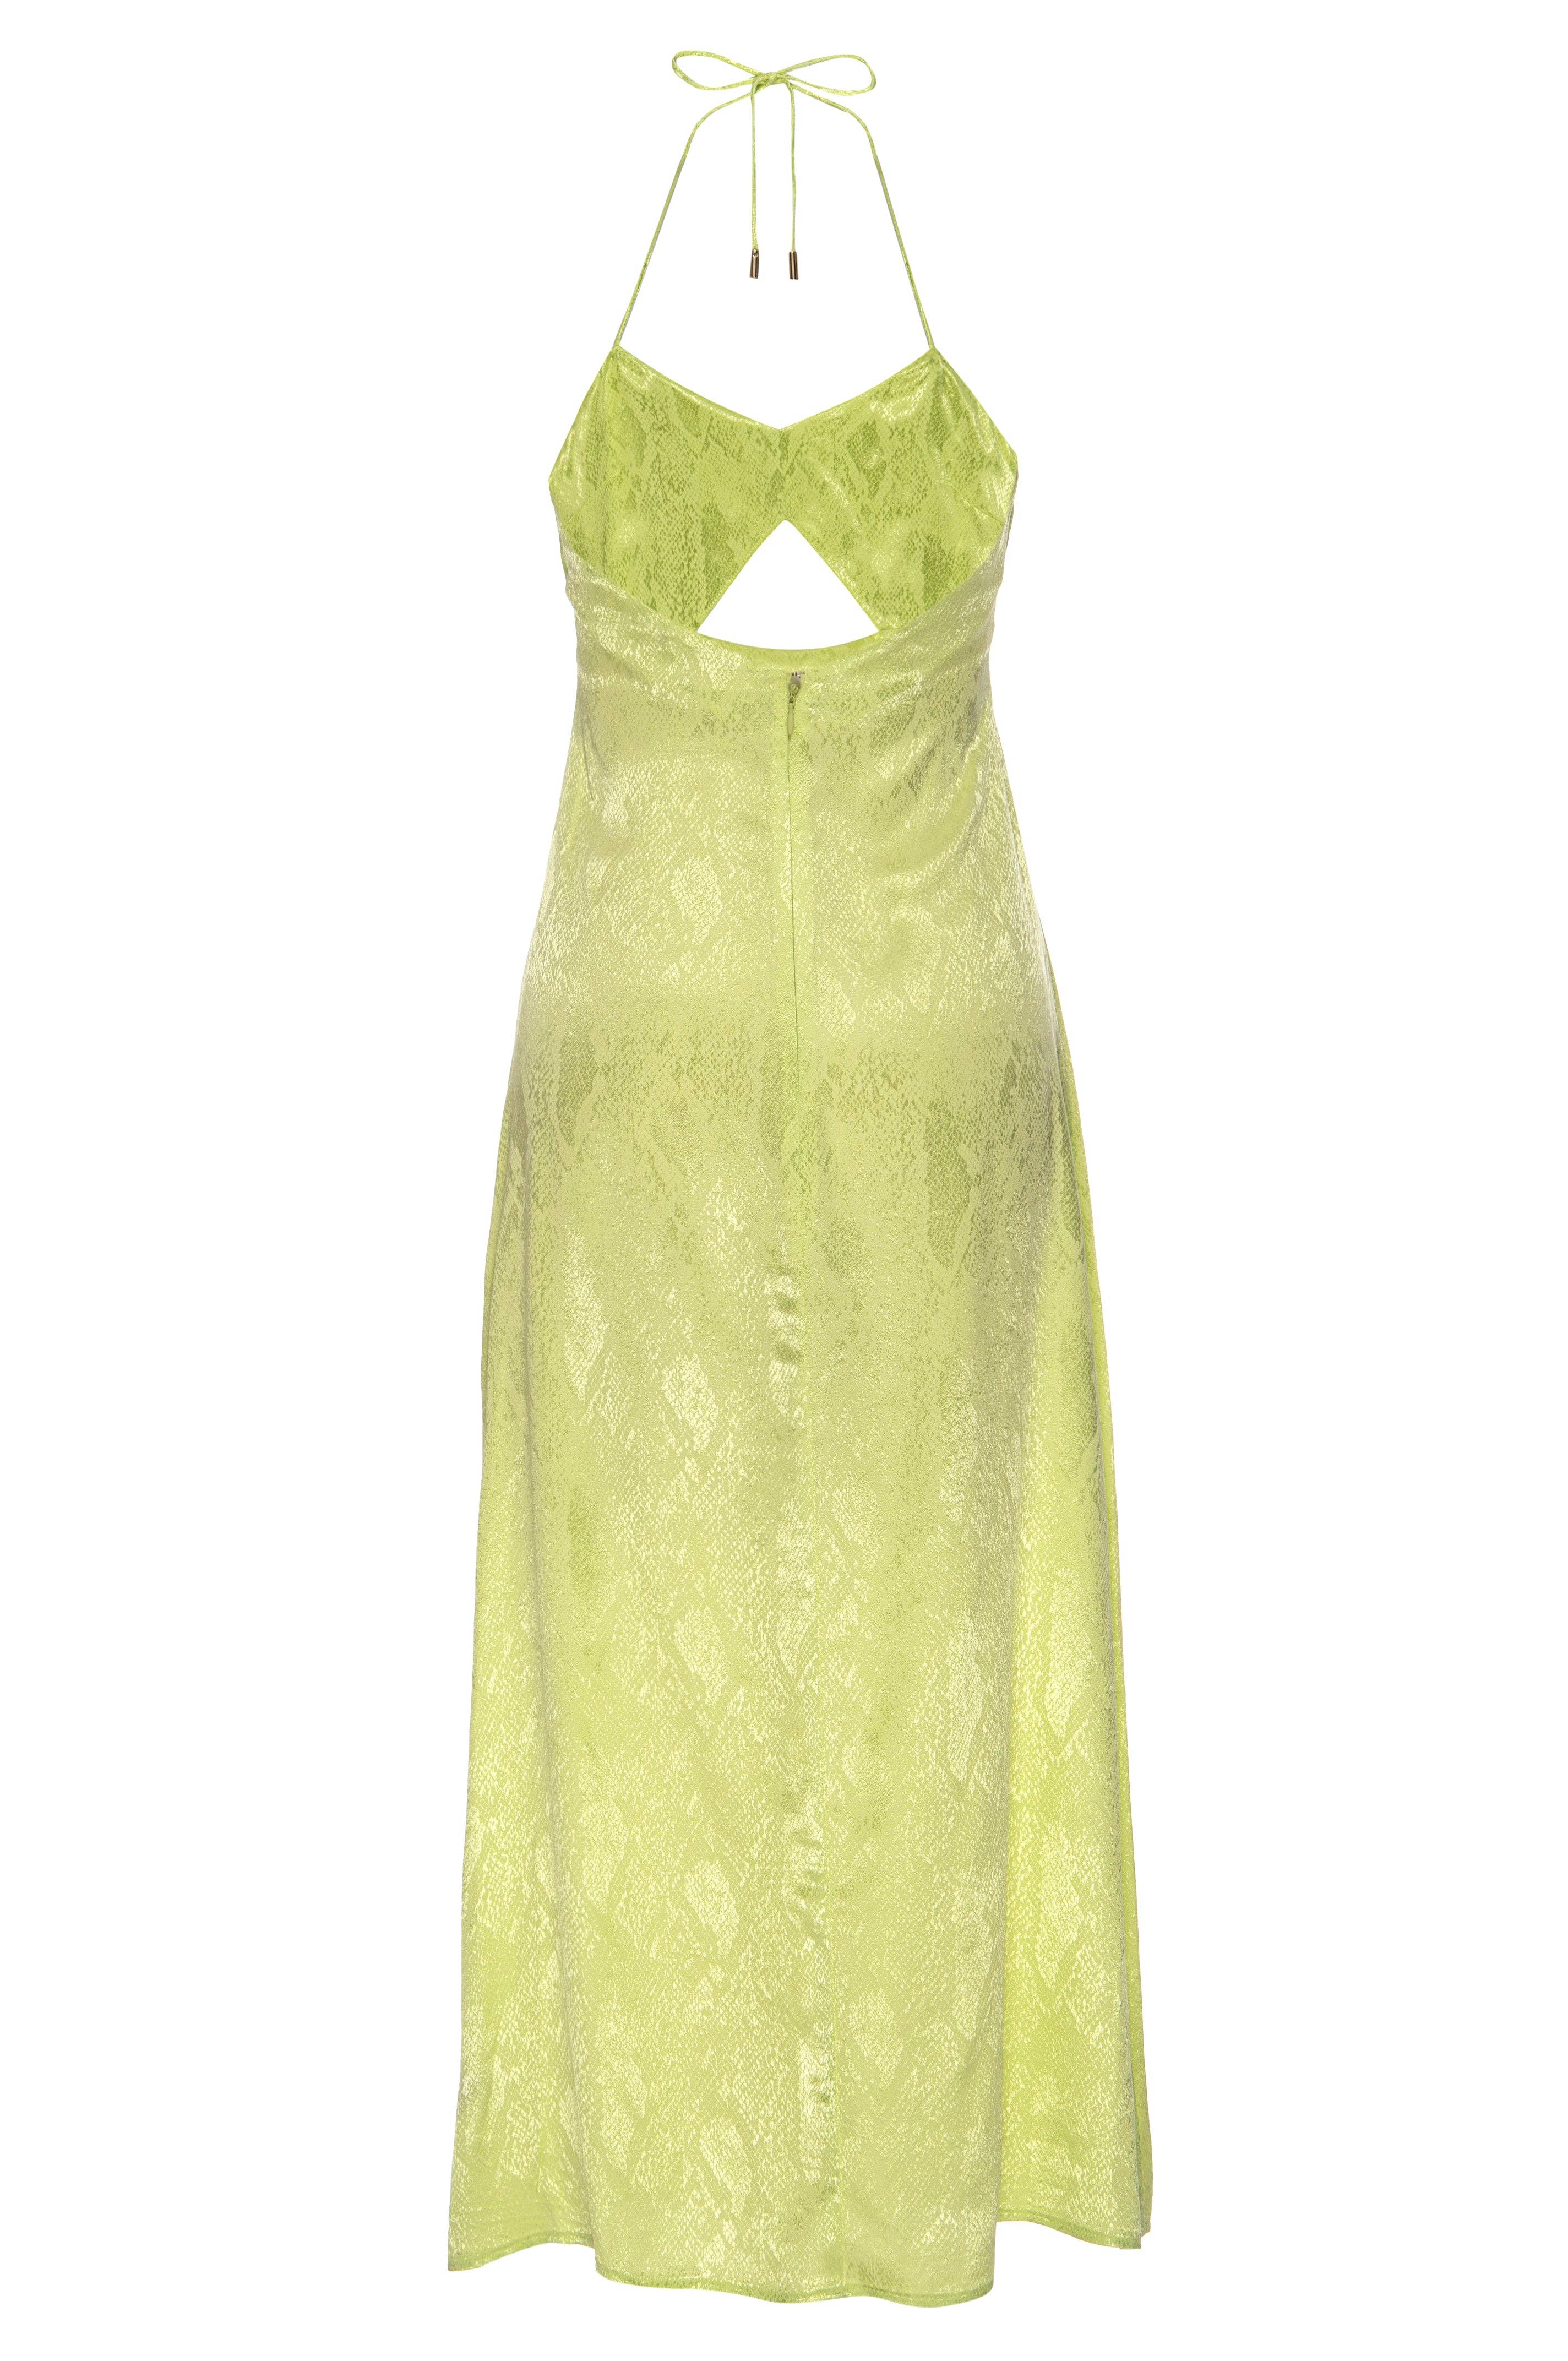 AFRM - Radish Dress - Snake Lime Jacquard